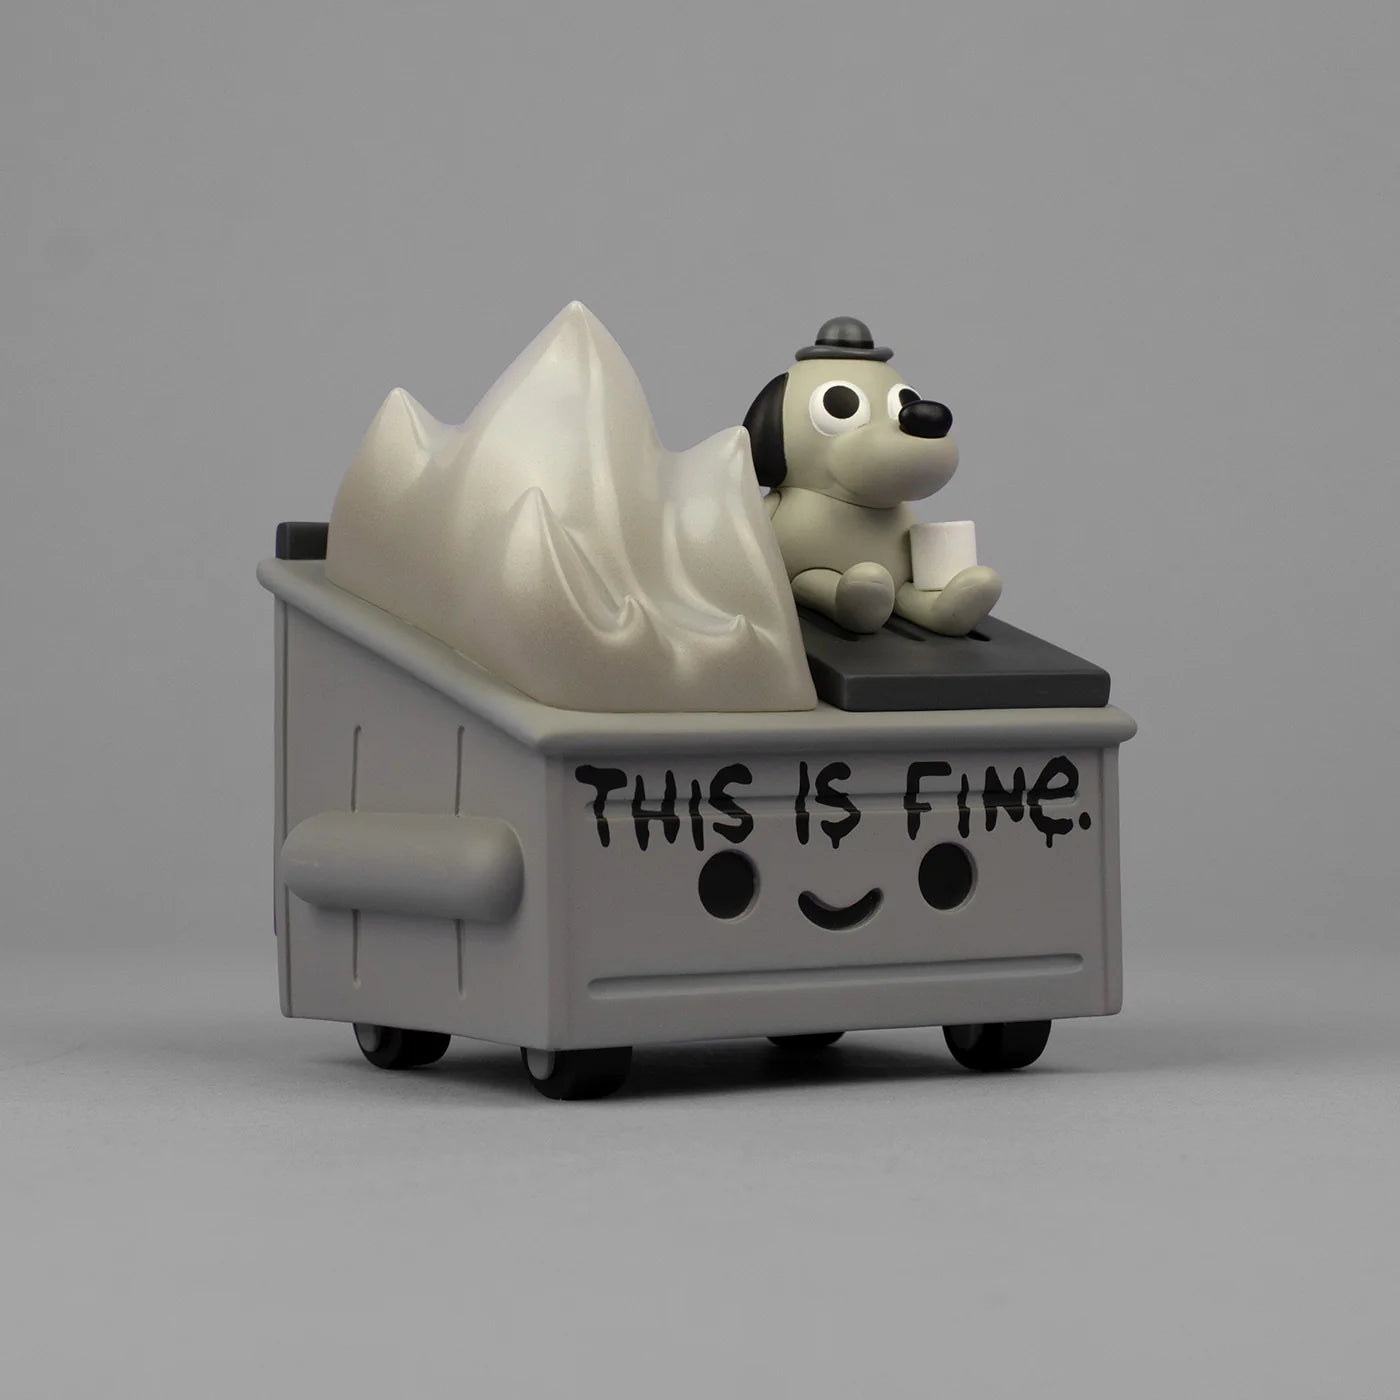 Dumpster Fire "This Is Fine" (Newsprint Edition) Vinyl Figure by 100% Soft